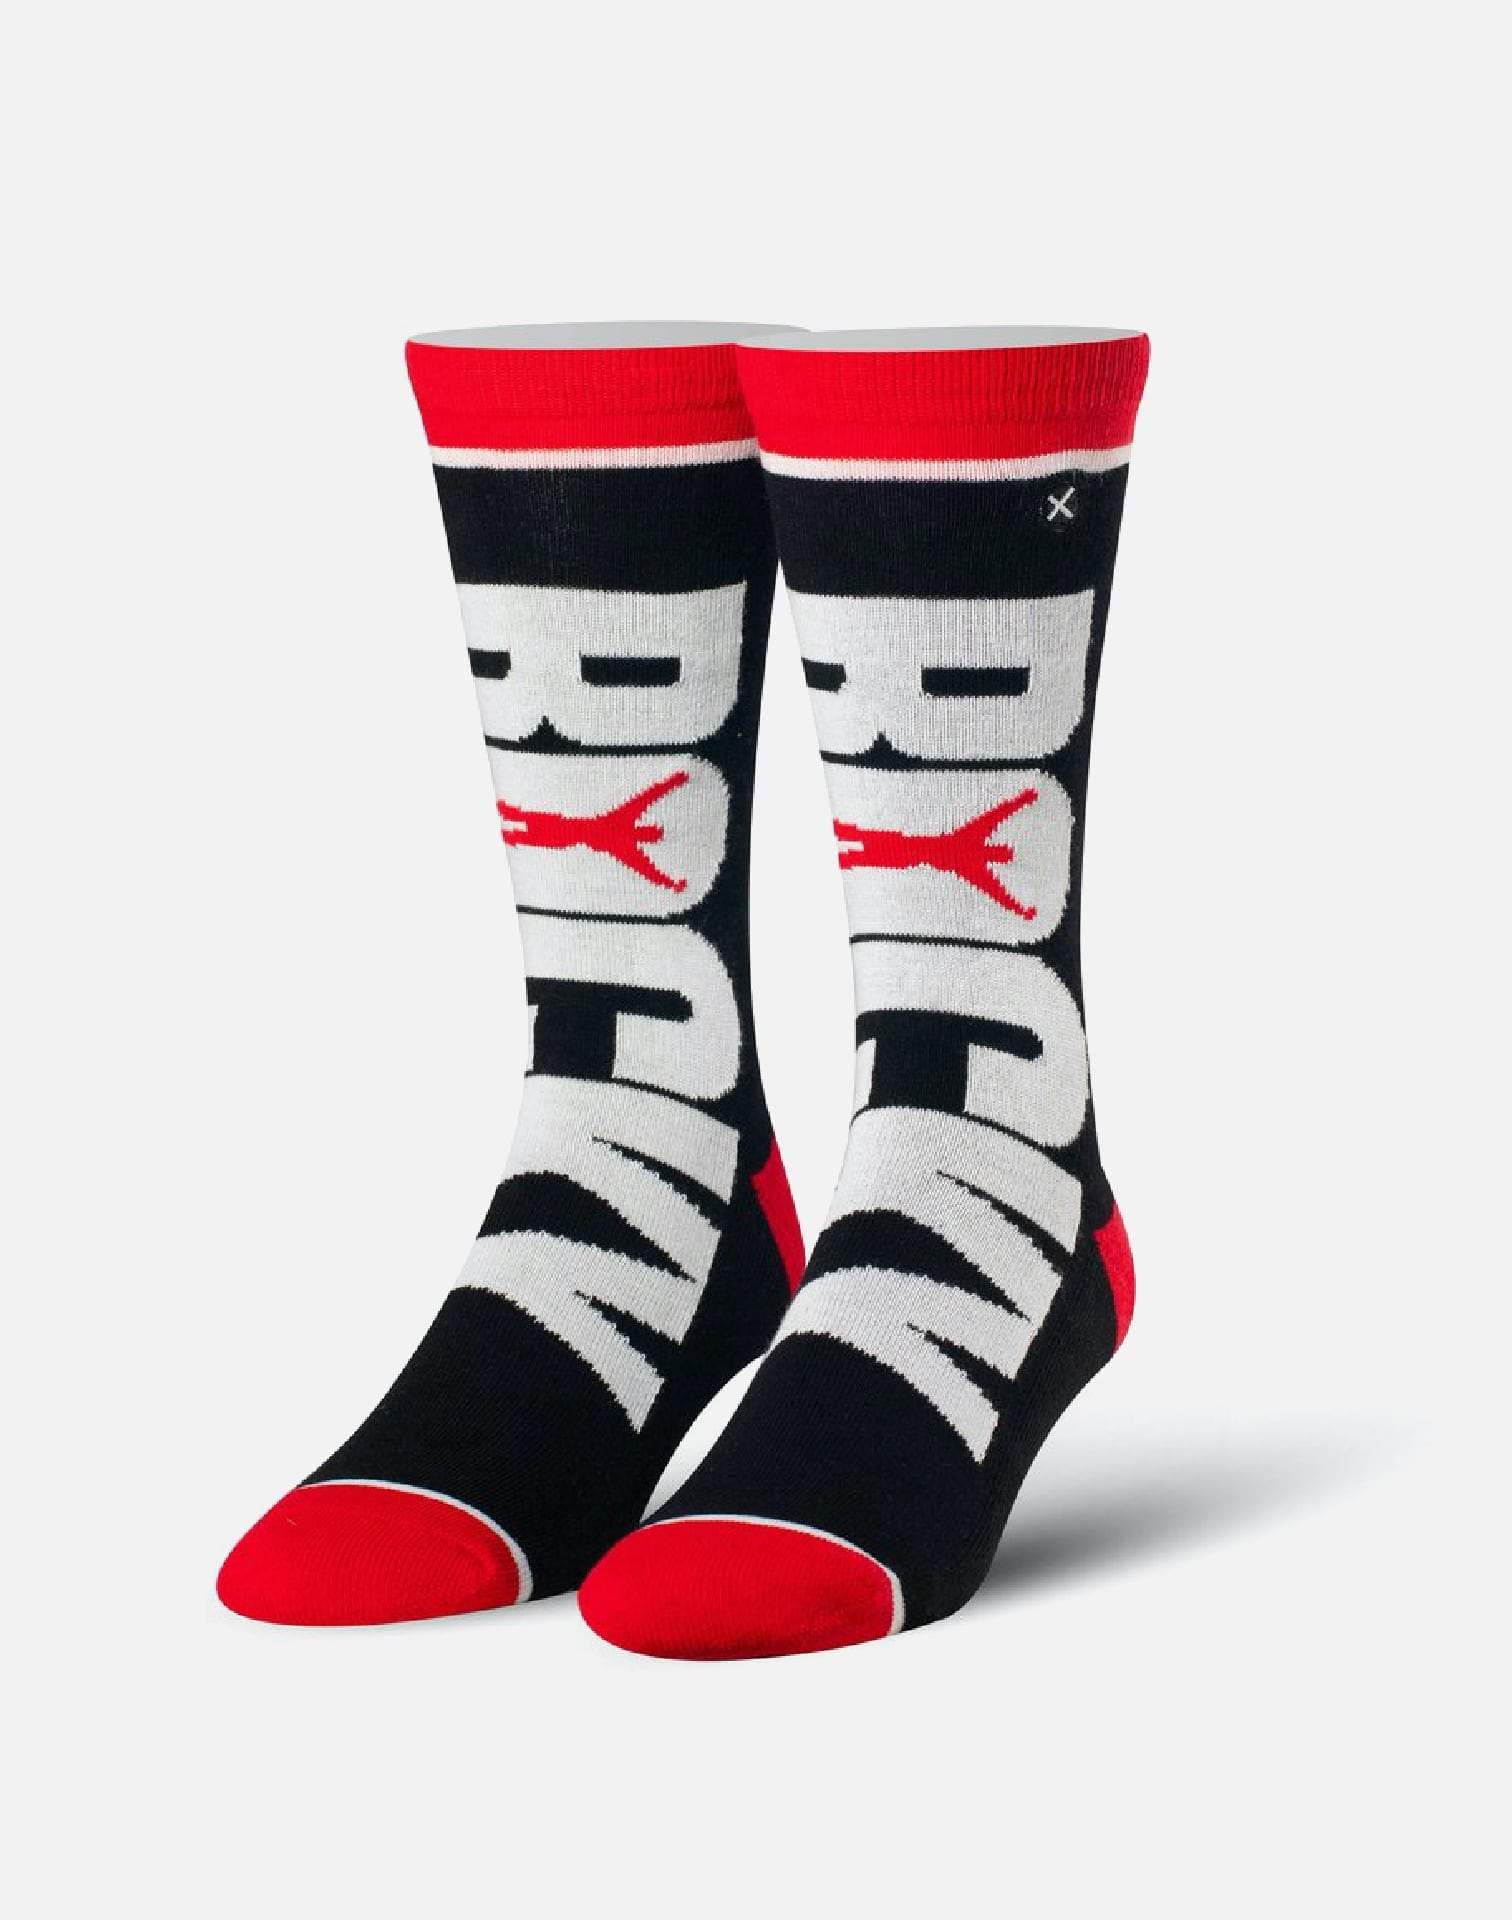 Odd Sox Rocky Logo Crew Socks